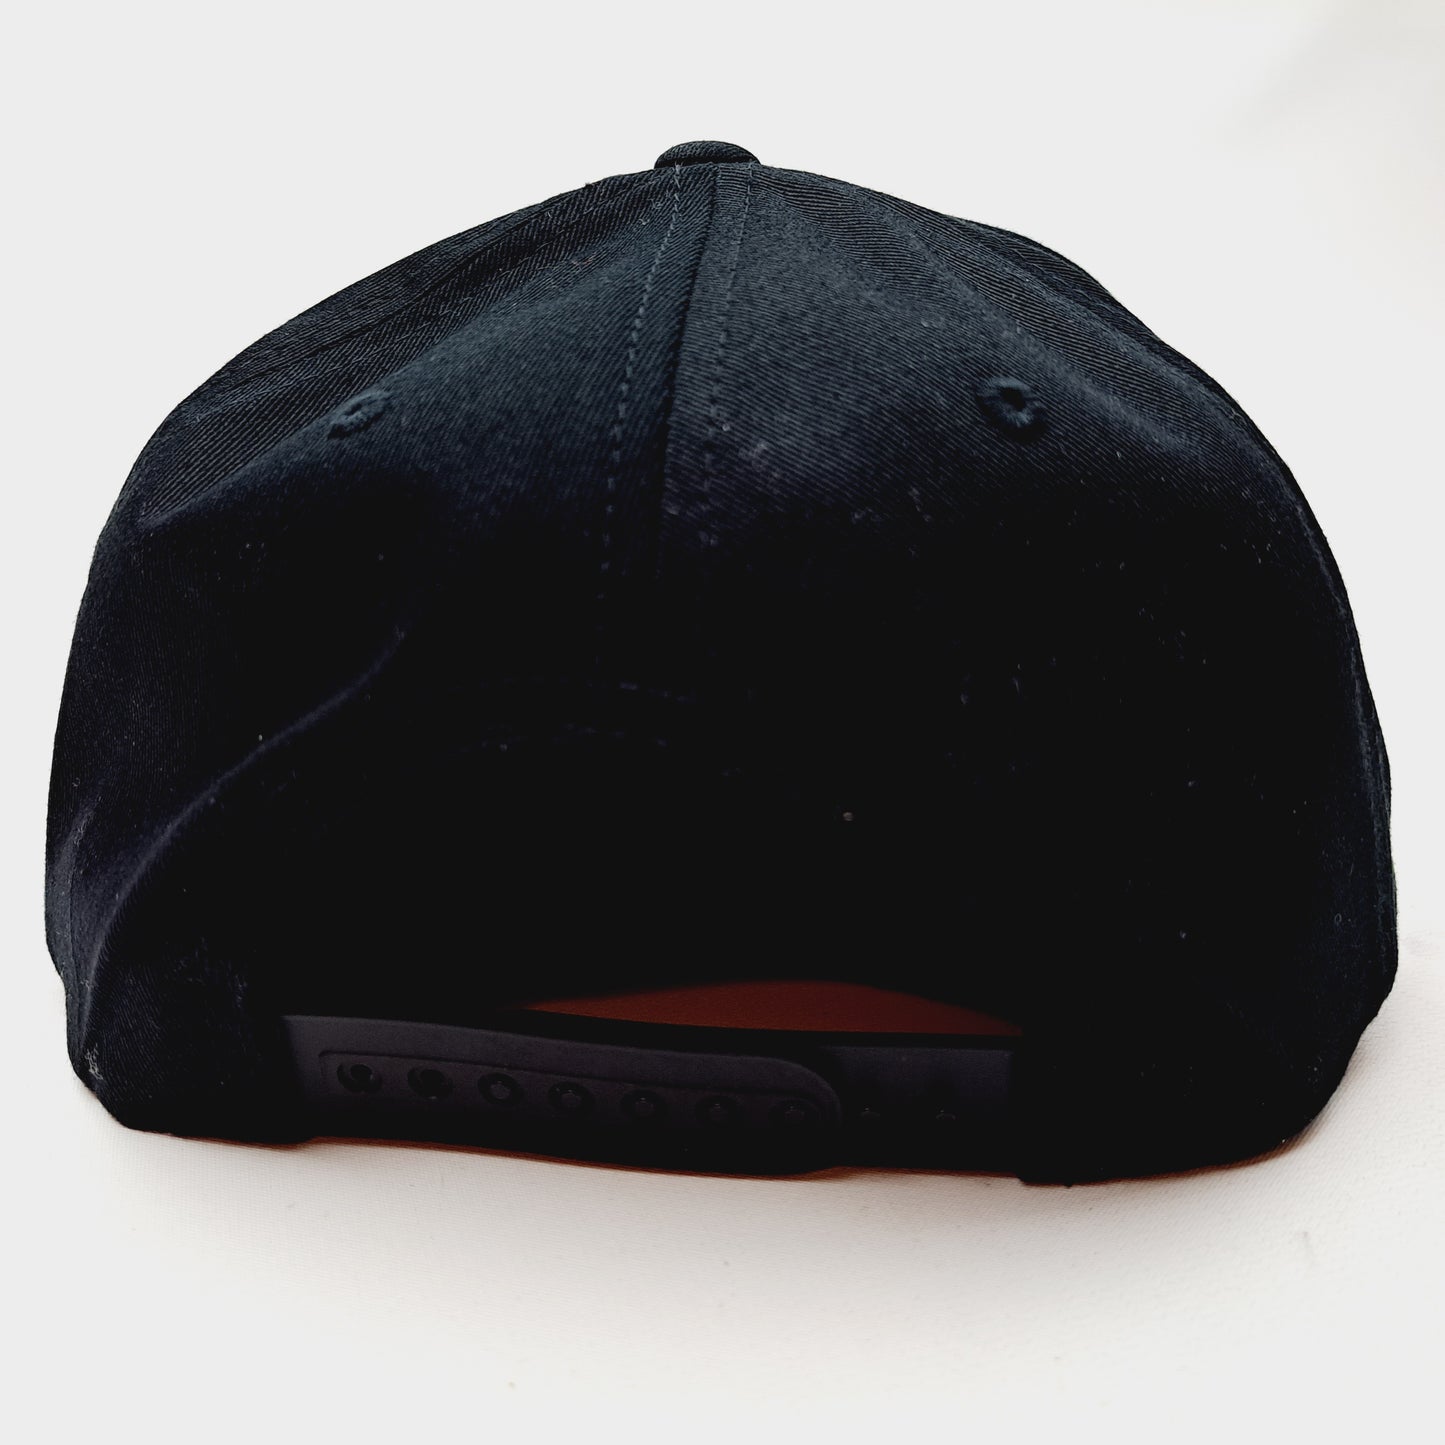 Los Angeles Dodgers Flat Bill Snapback Cap Hat Black Puff Embbroidered